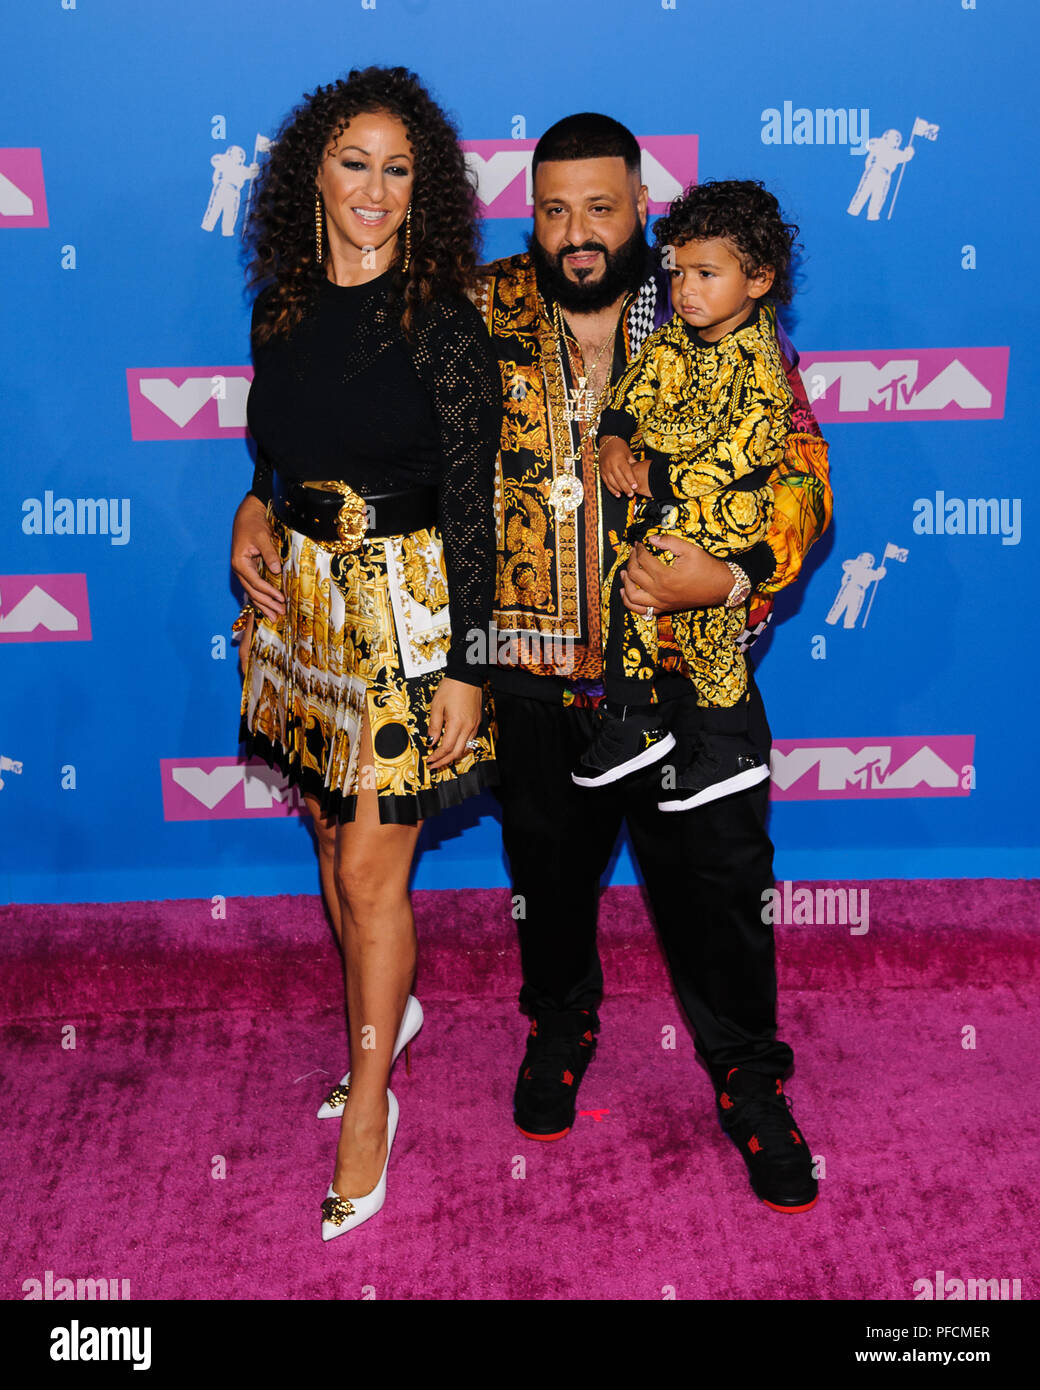 New York, New York, USA. 20 Aug, 2018. DJ Khaled und Familie bei den 2018 MTV Video Music Awards in der Radio City Music Hall. Credit: Mario Santoro/AdMedia/ZUMA Draht/Alamy leben Nachrichten Stockfoto